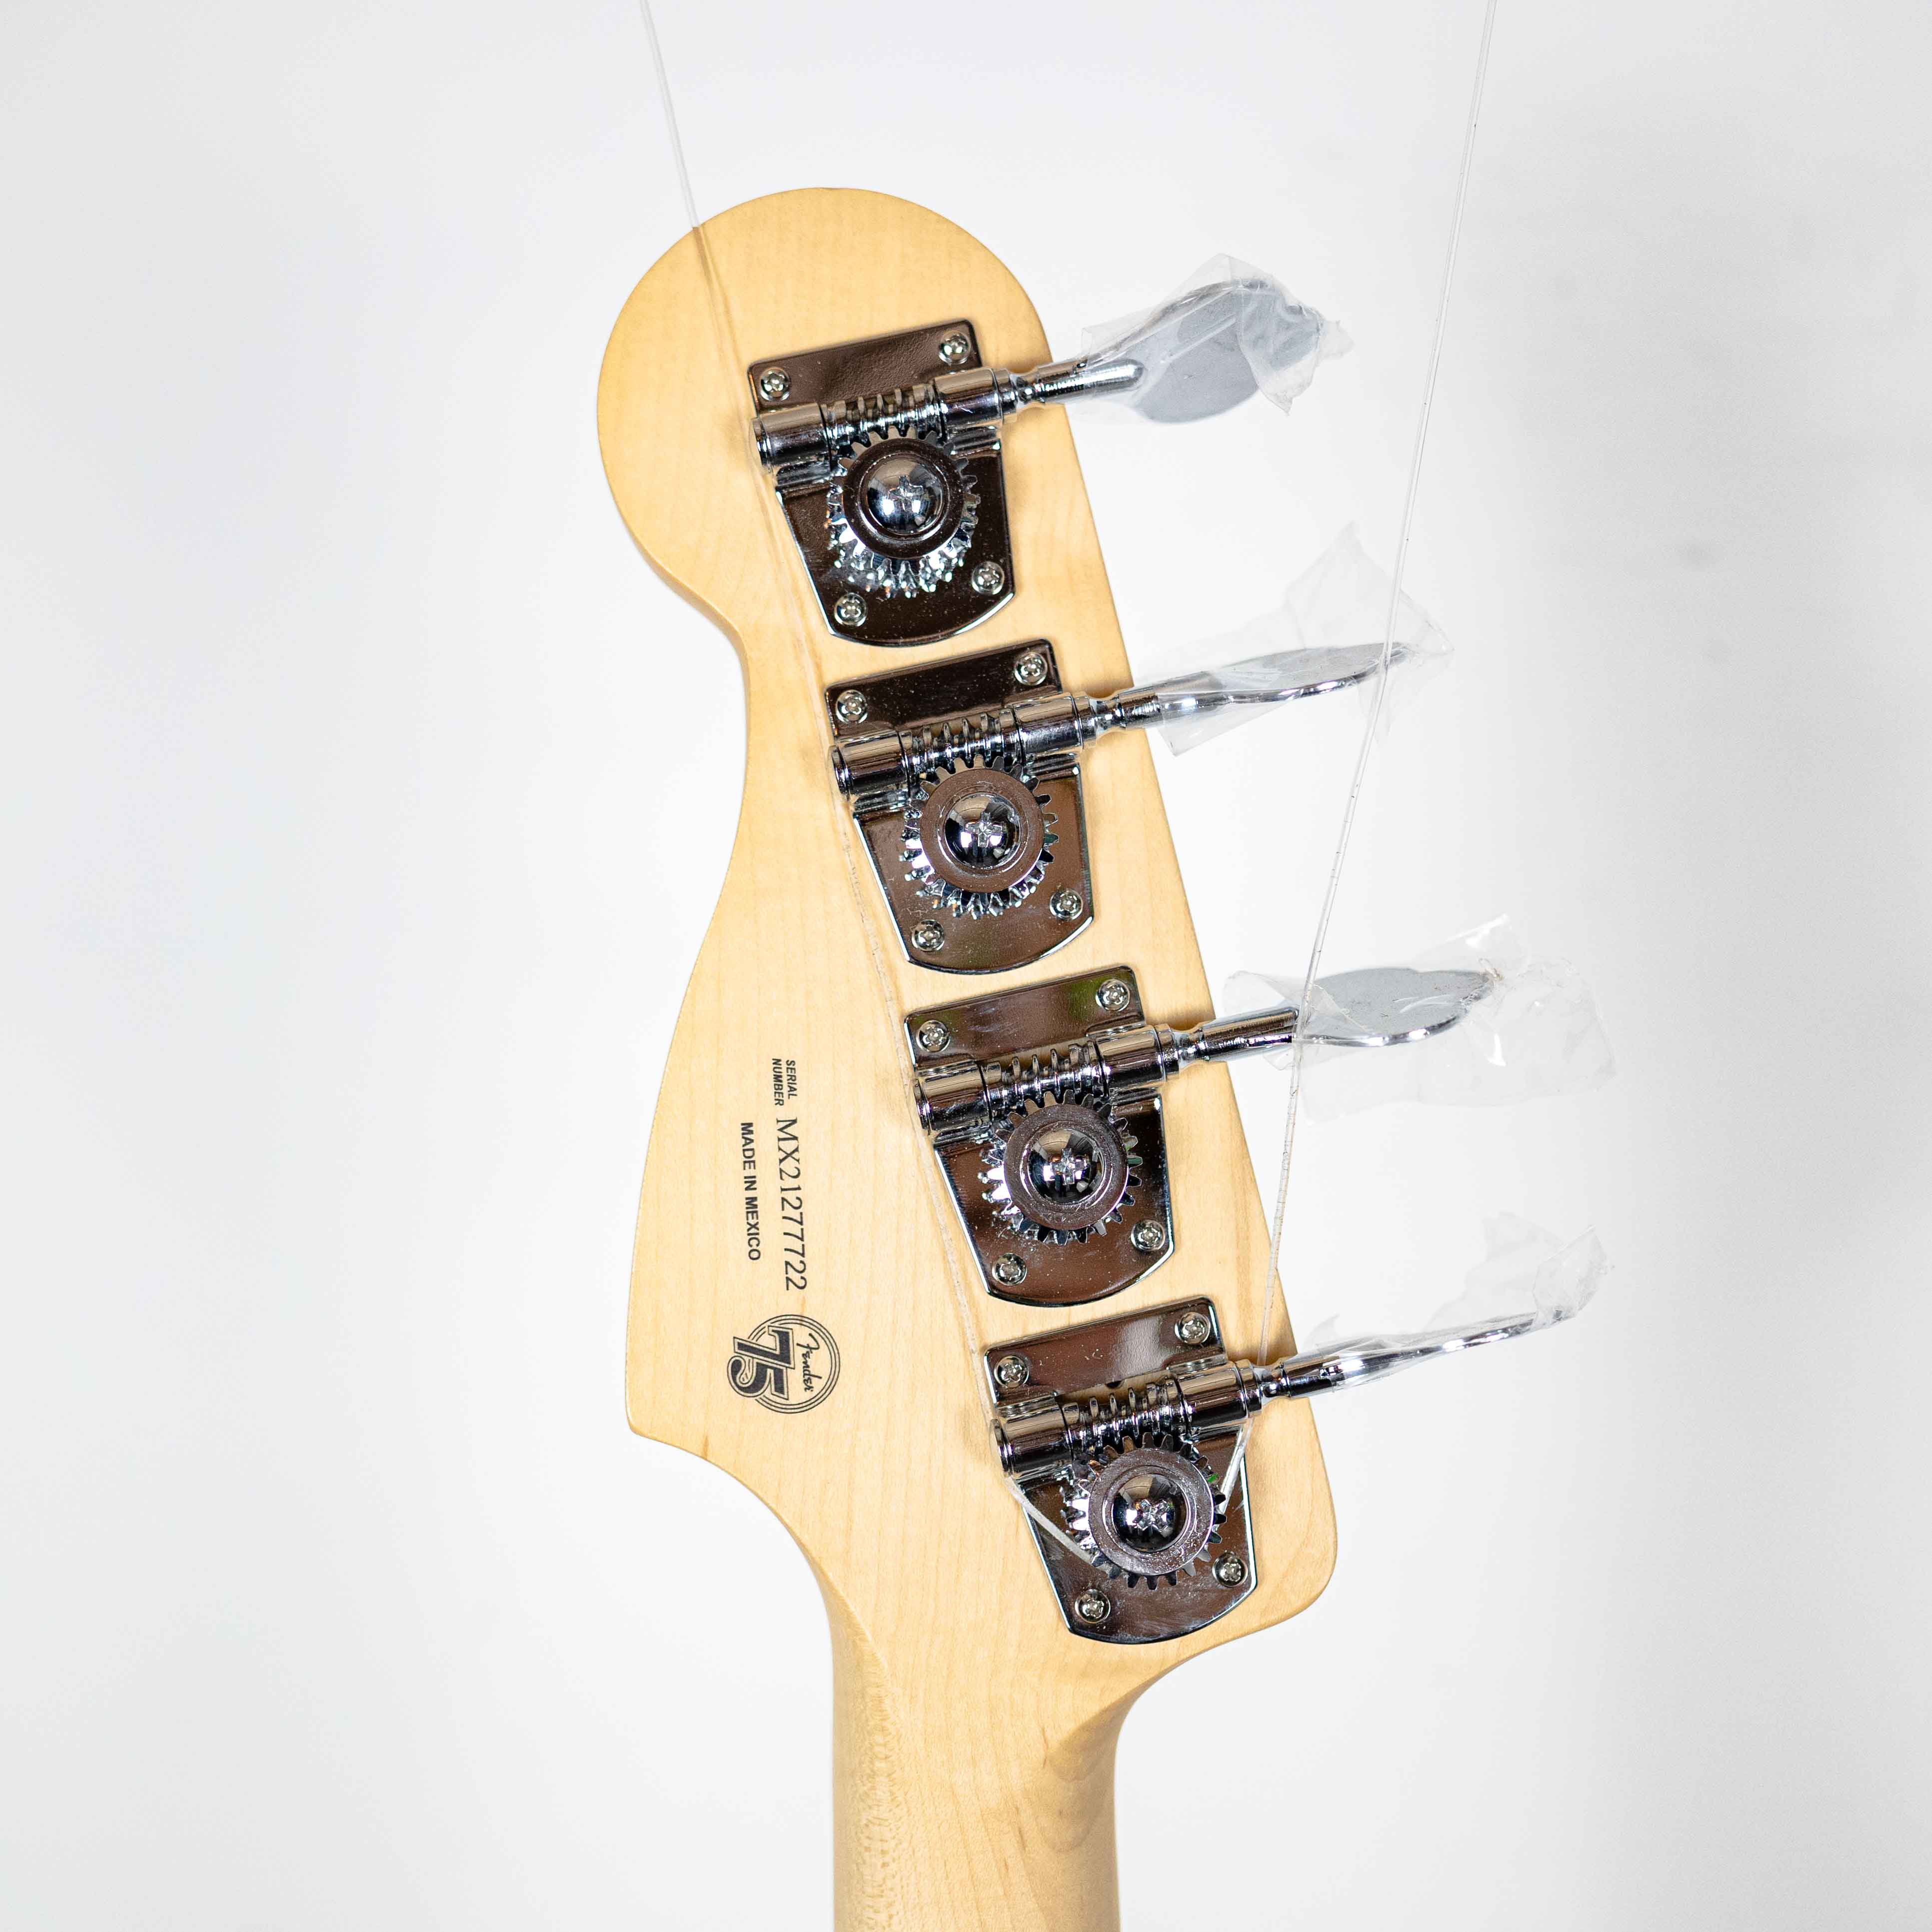 Fender Player Precision Bass Black, Maple Neck